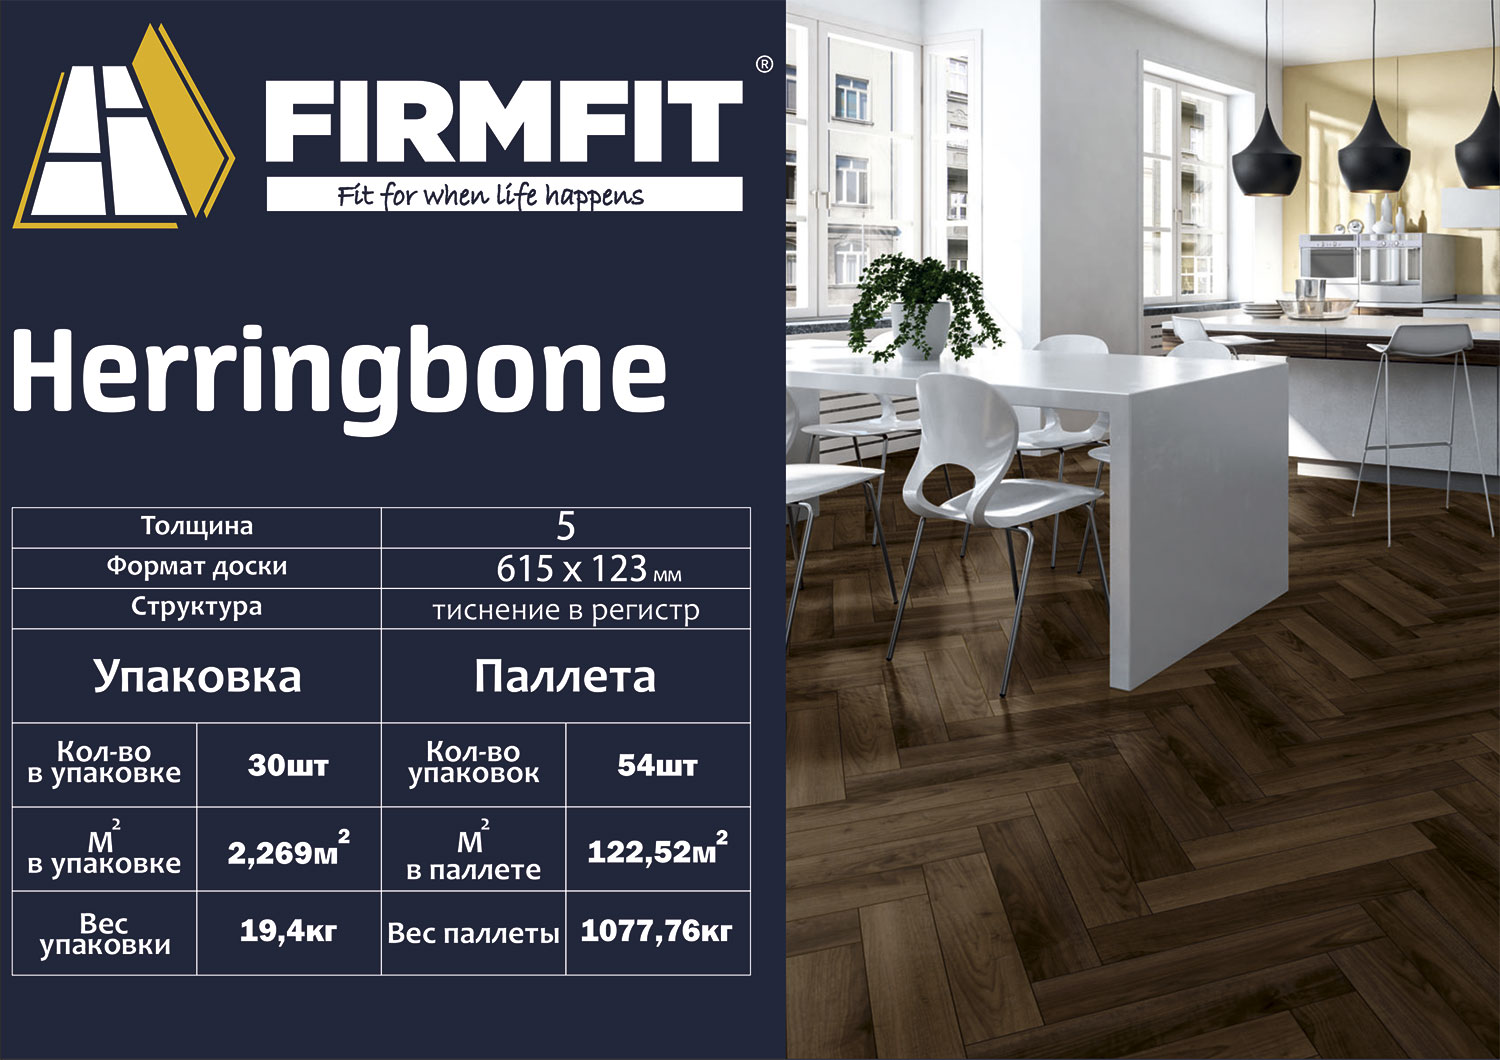 FirmFit Herringbone характеристики упаковки